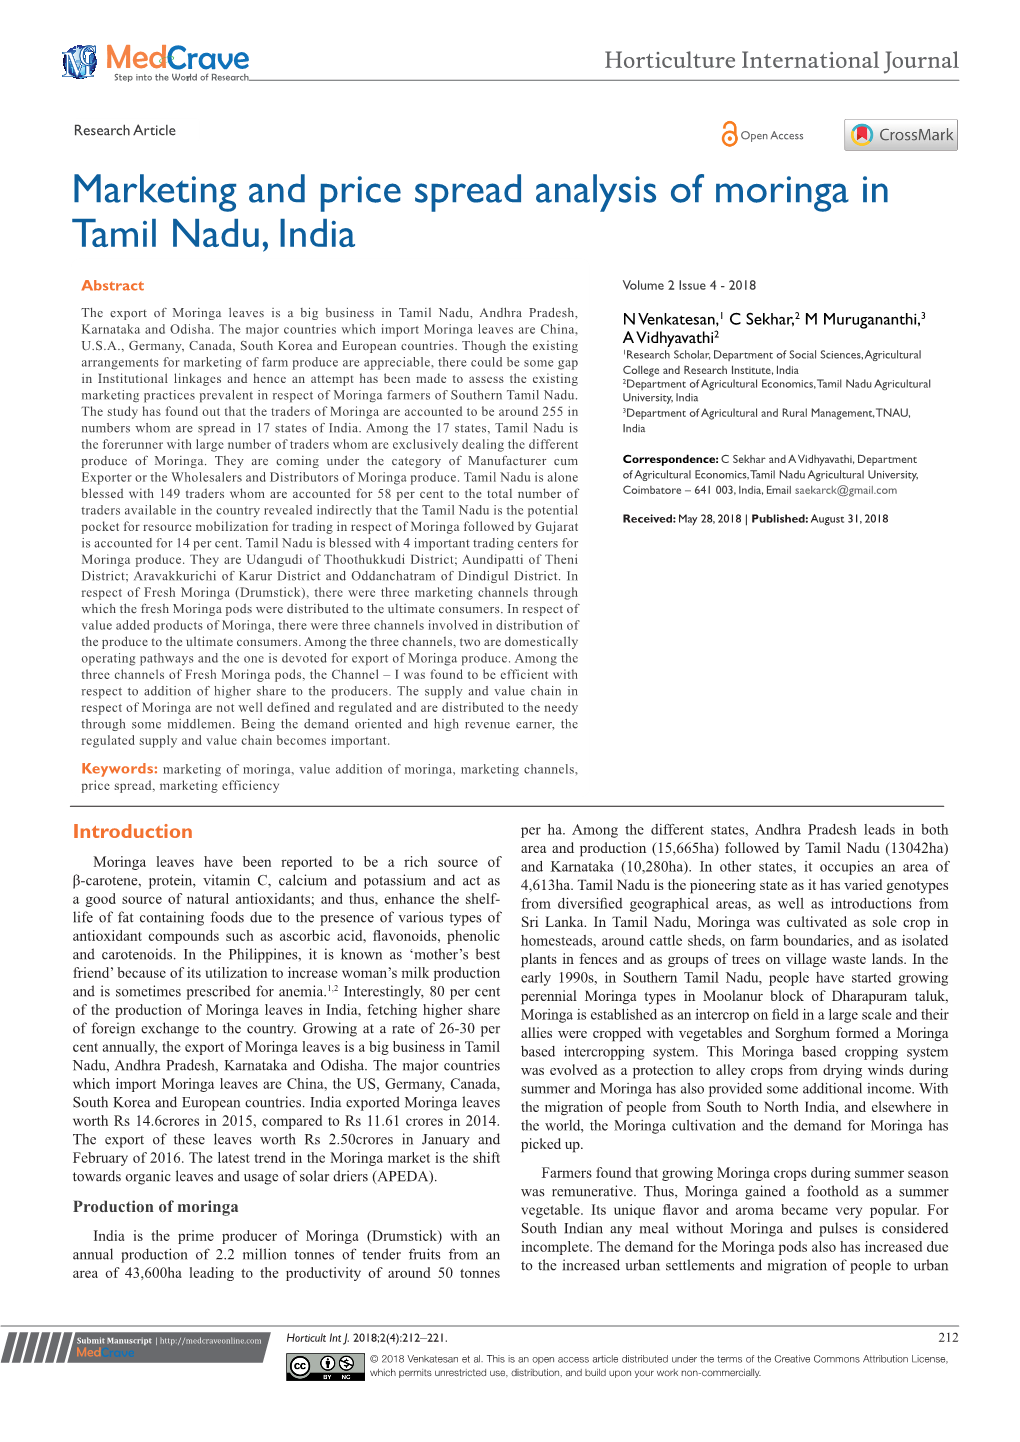 Marketing and Price Spread Analysis of Moringa in Tamil Nadu, India